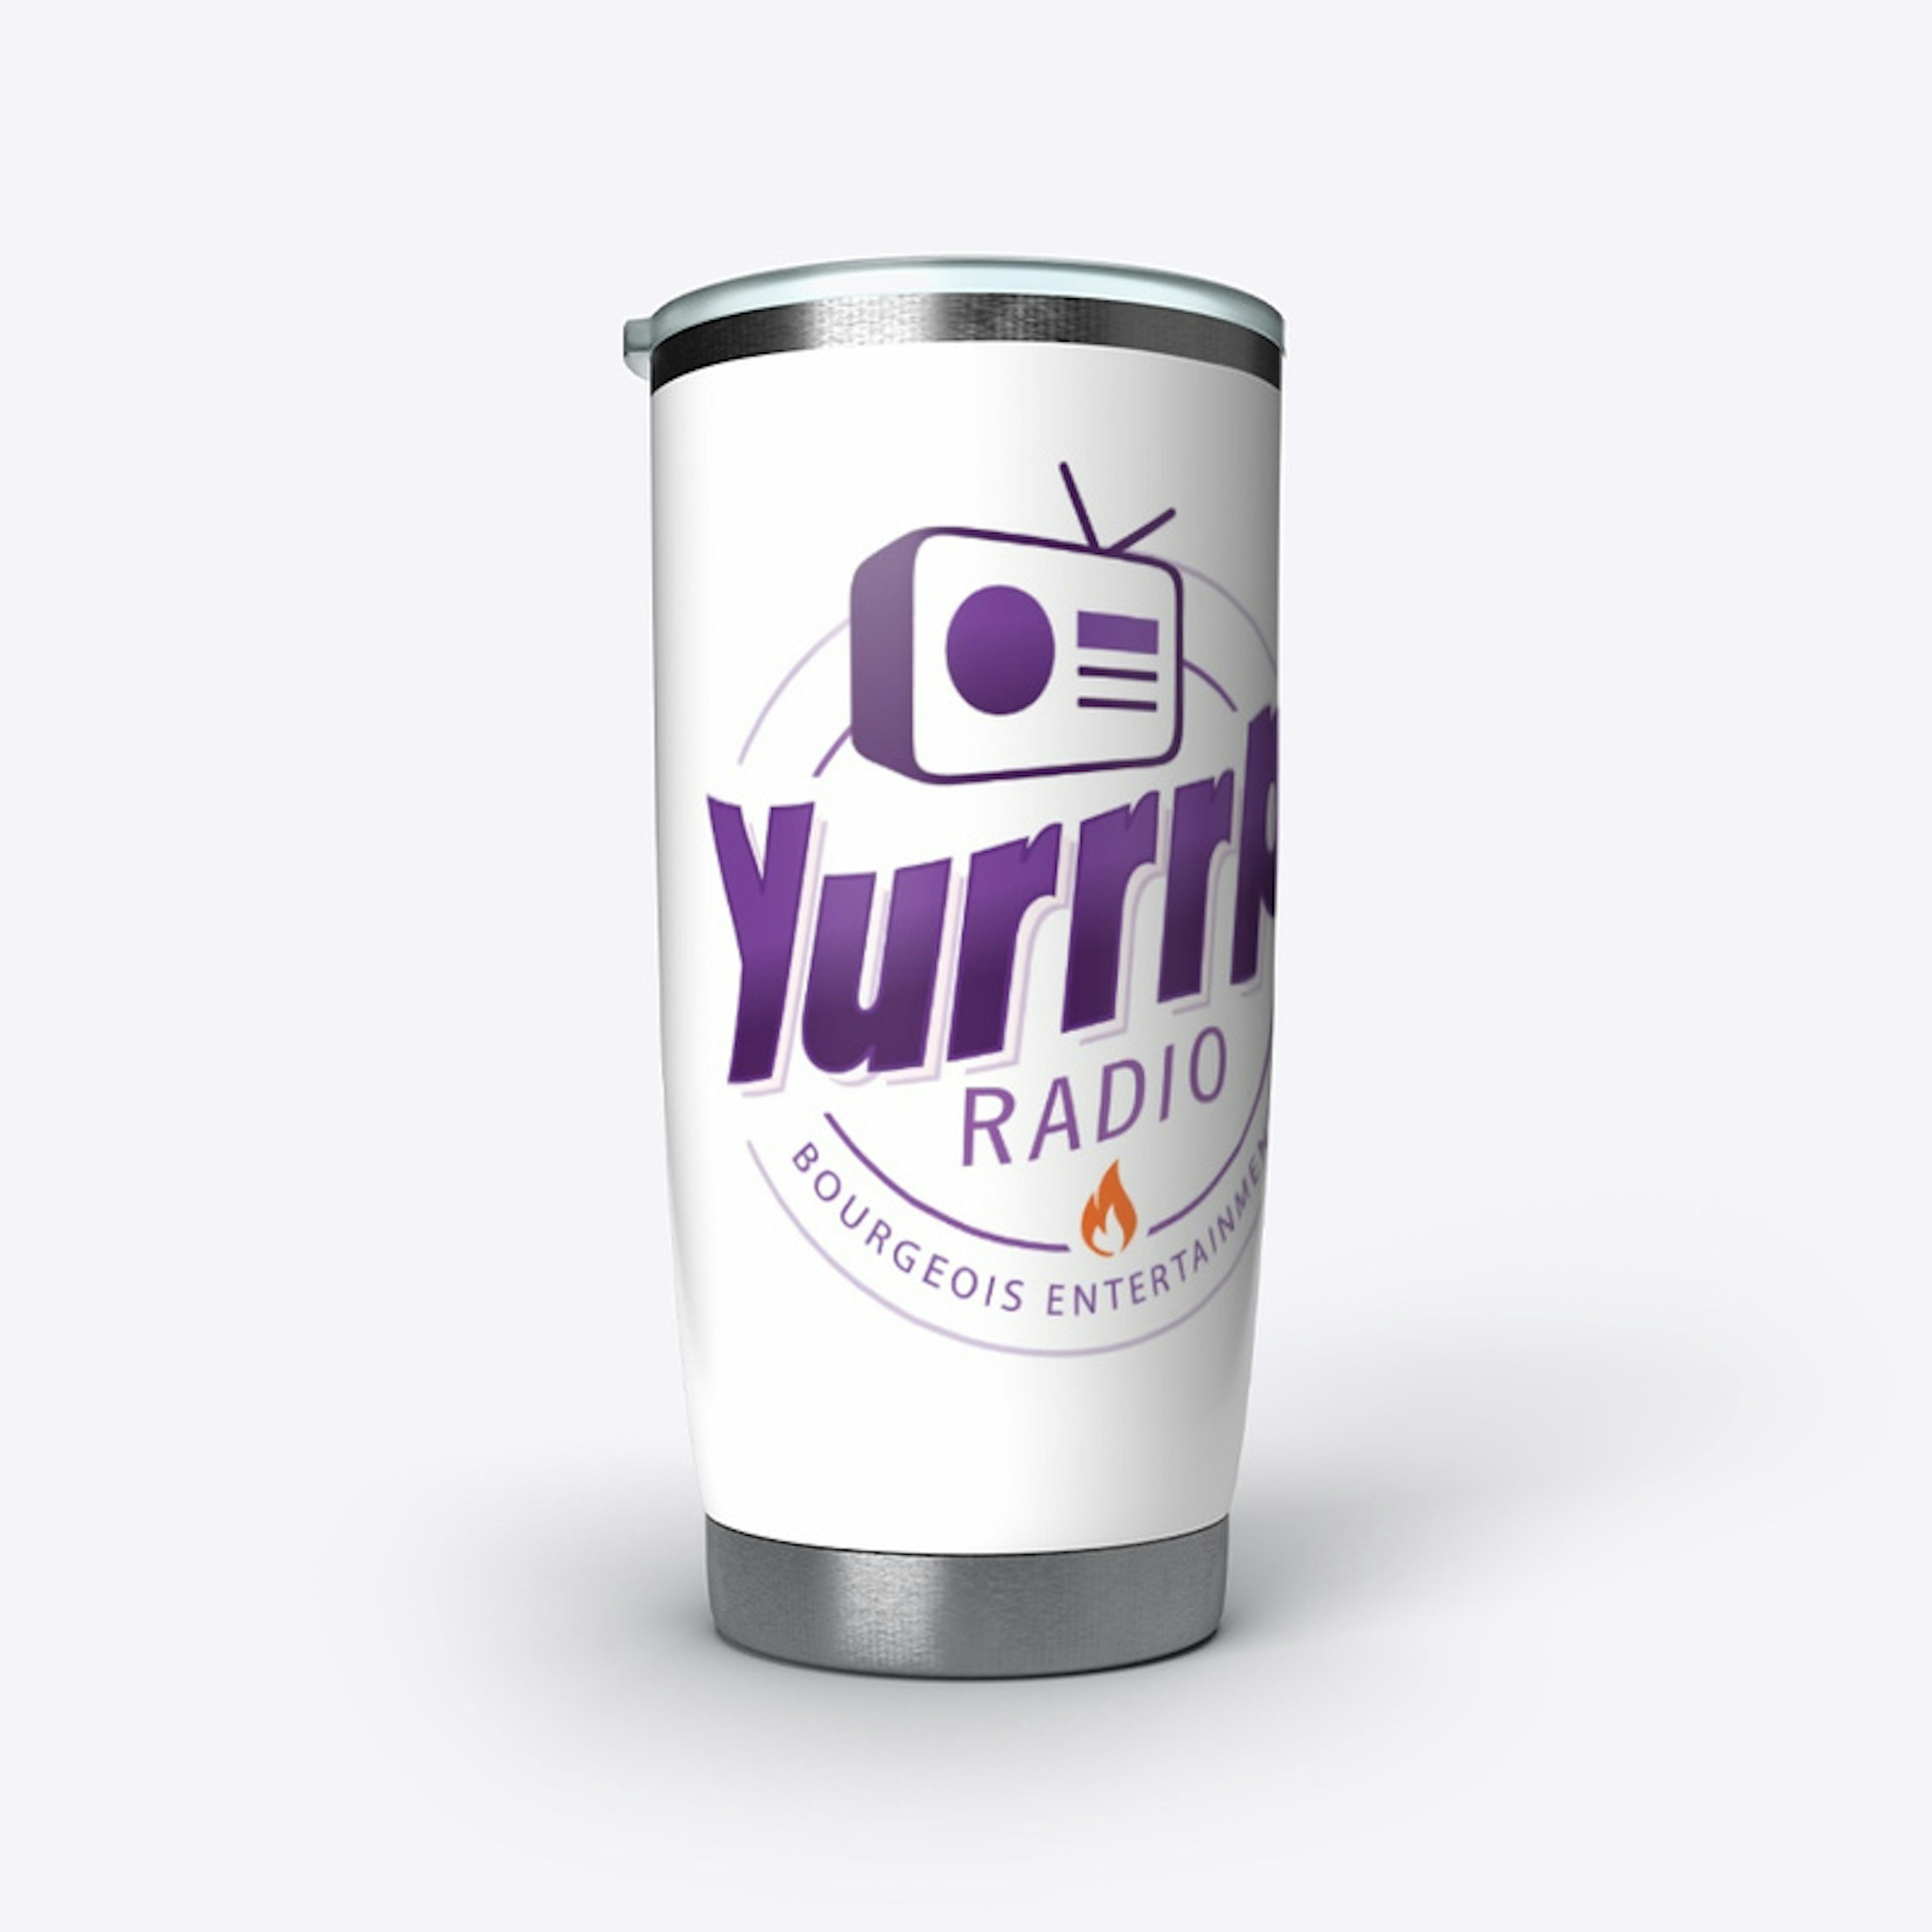 YurrrP Radio